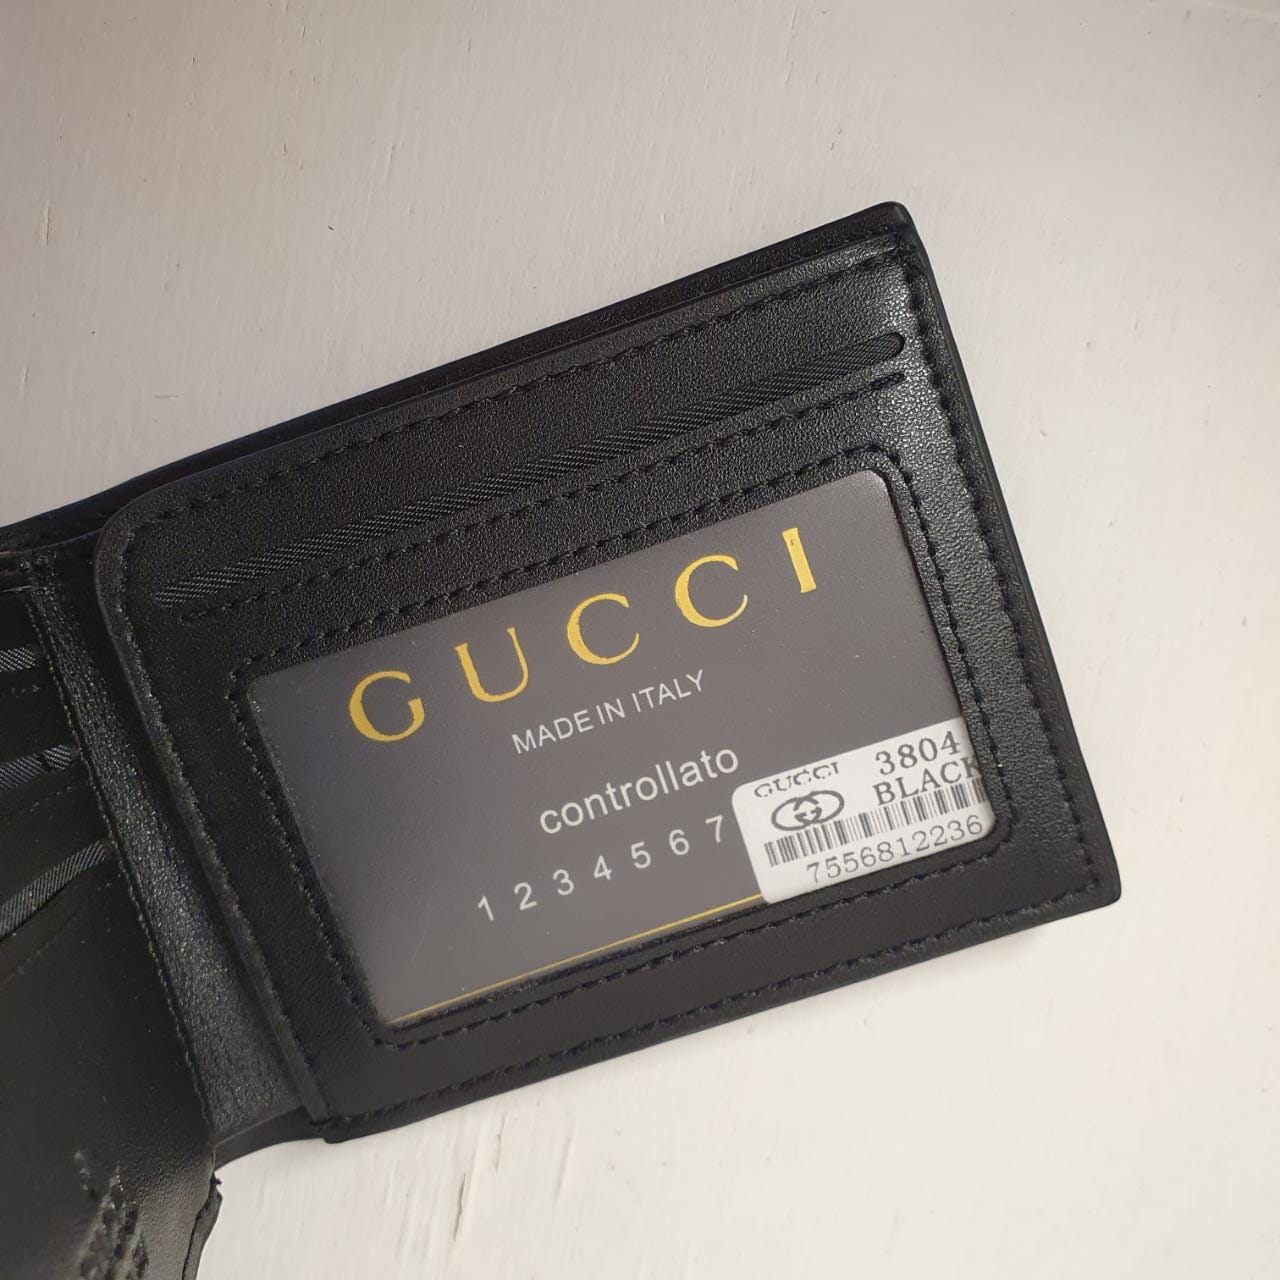 Gucci Men's Wallet